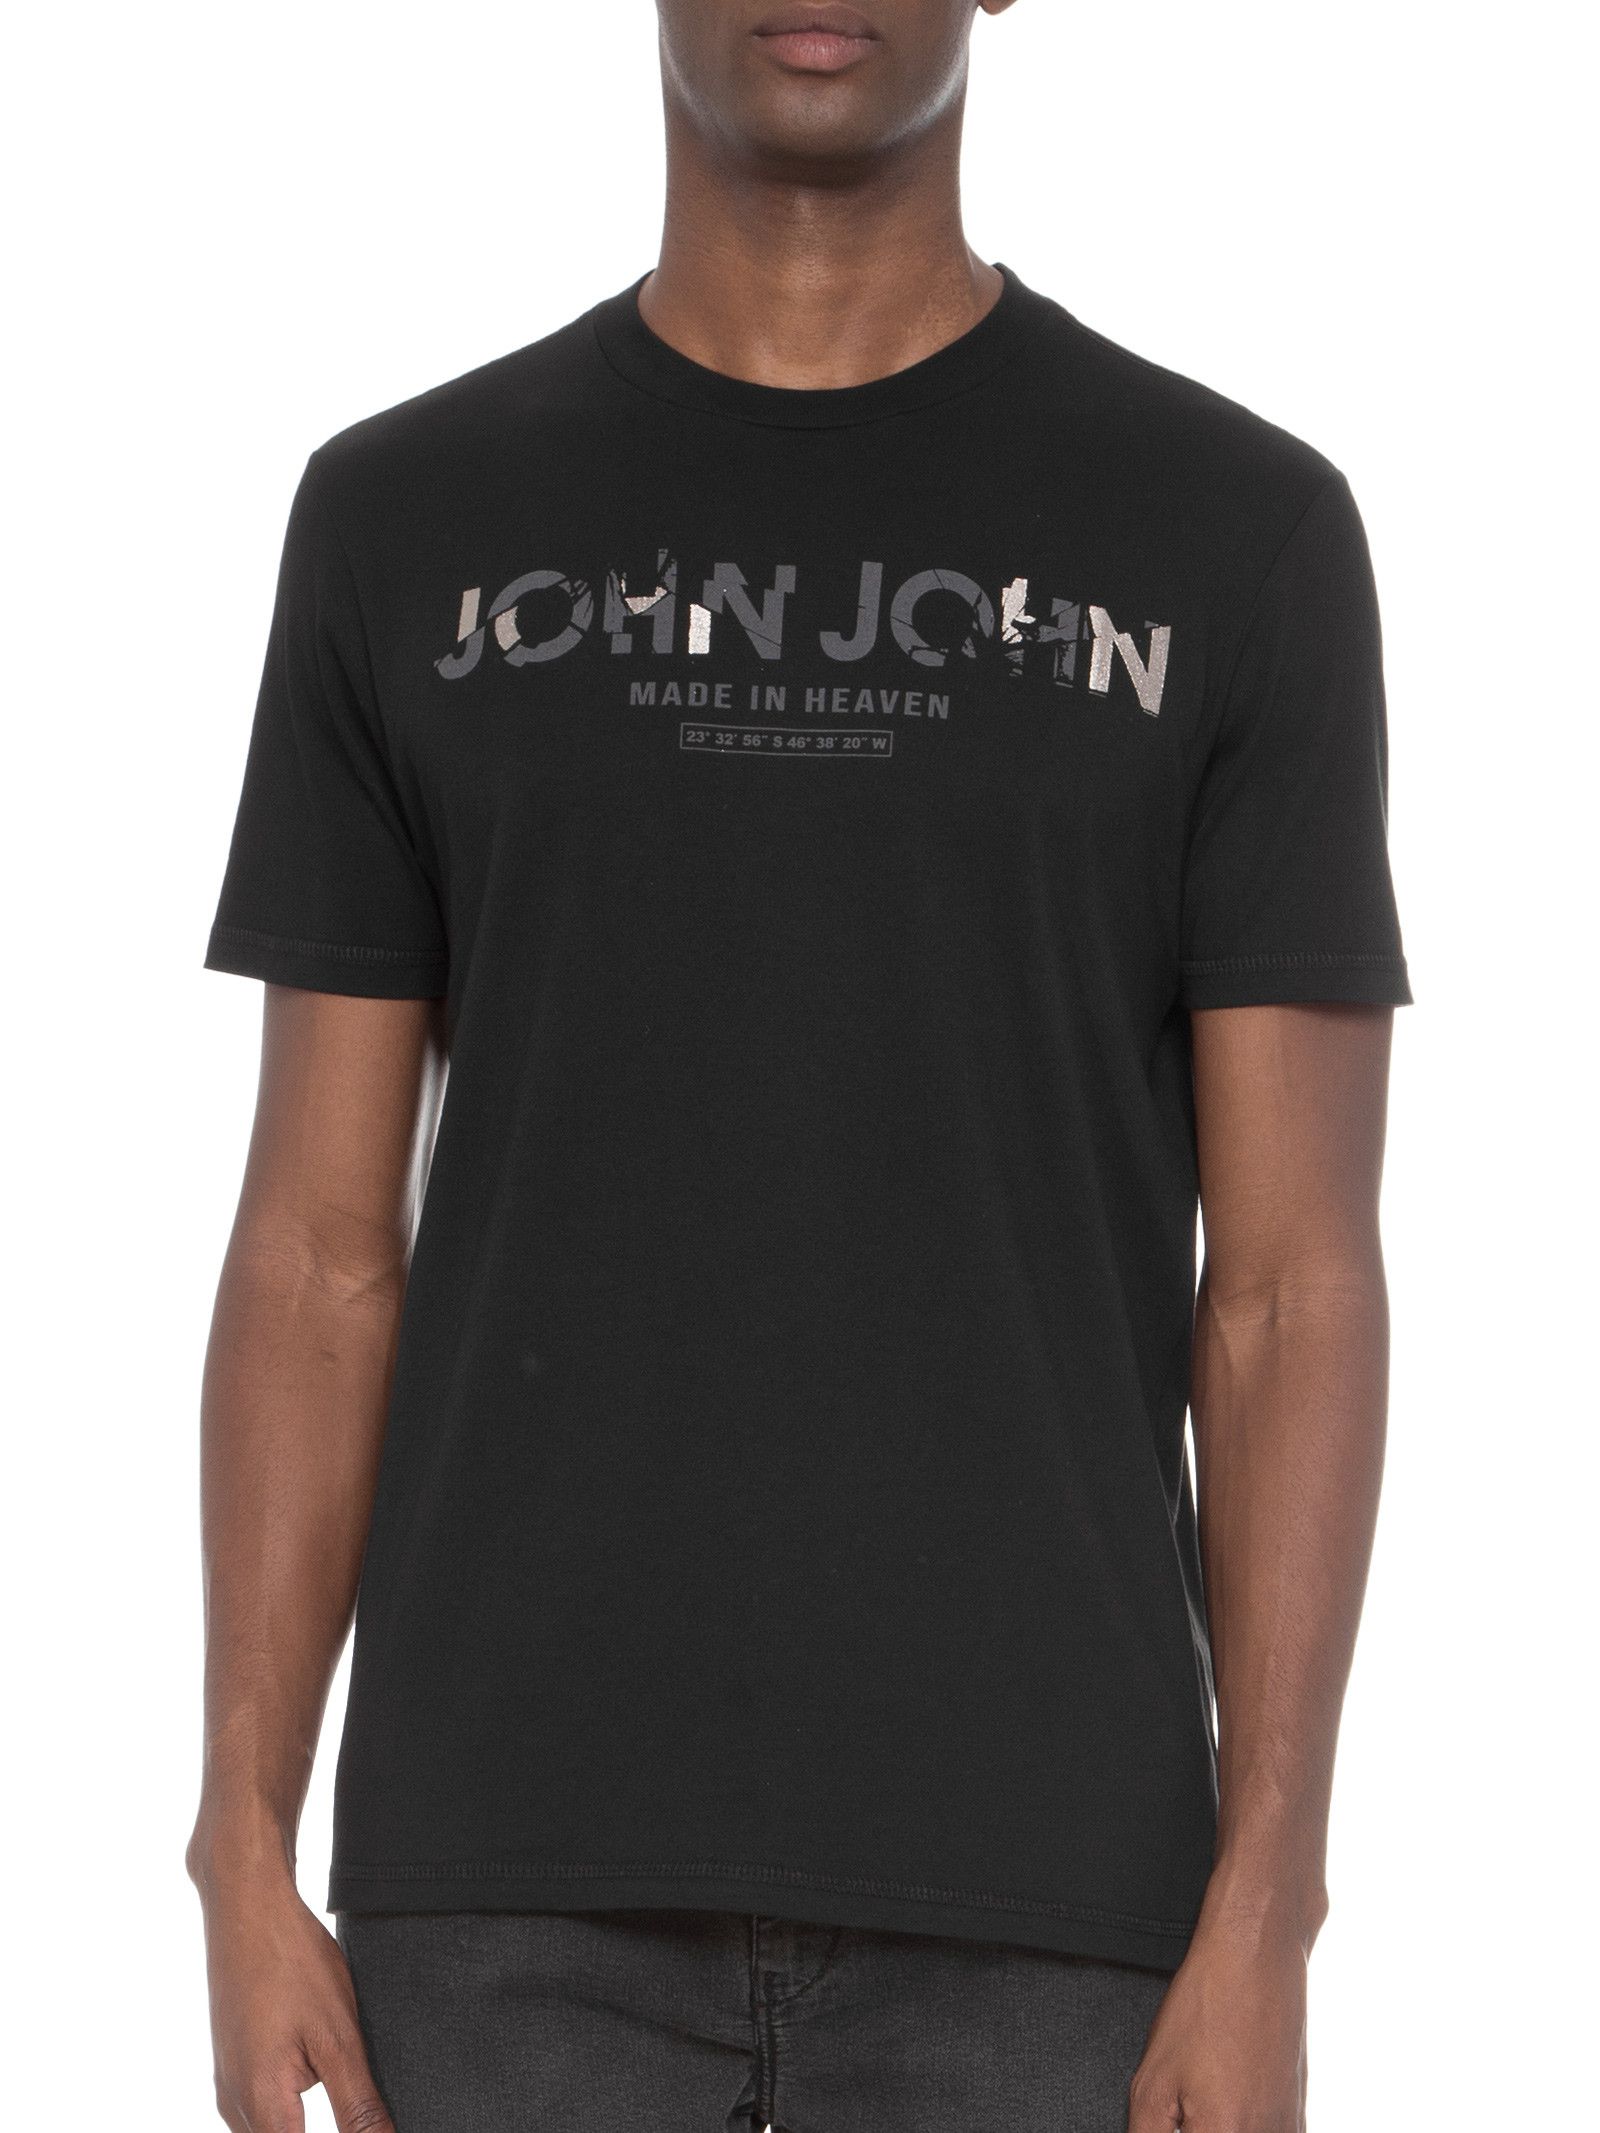 Camiseta John John Broken Masculina Branco - Dom Store Multimarcas